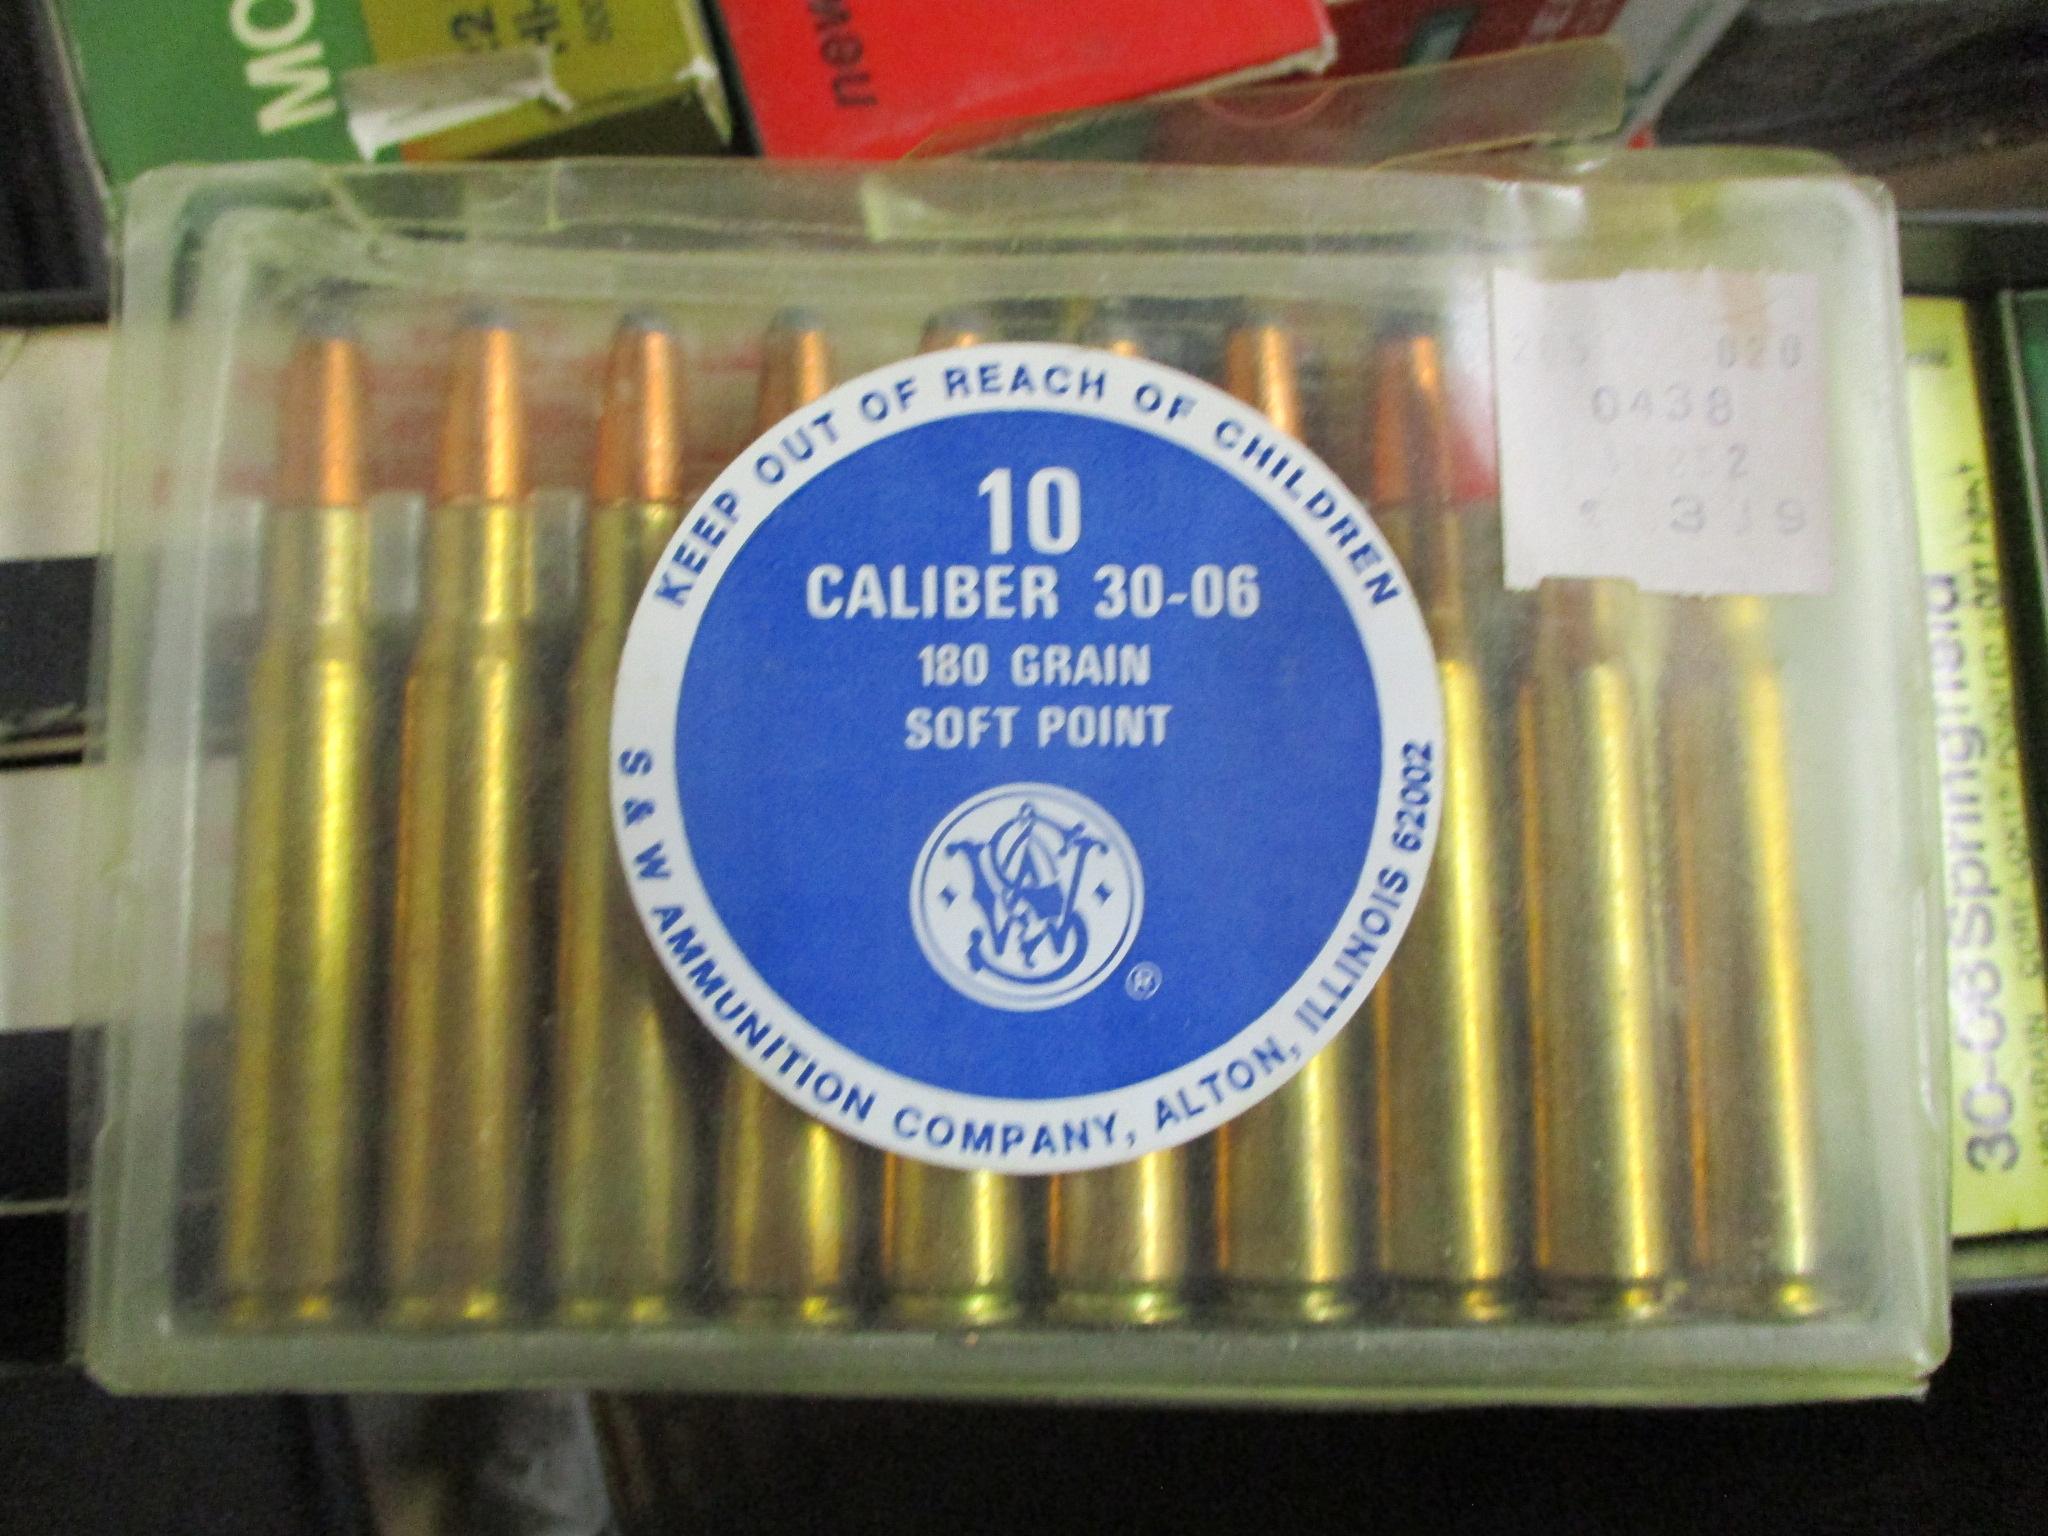 Assorted 30-06 ammo